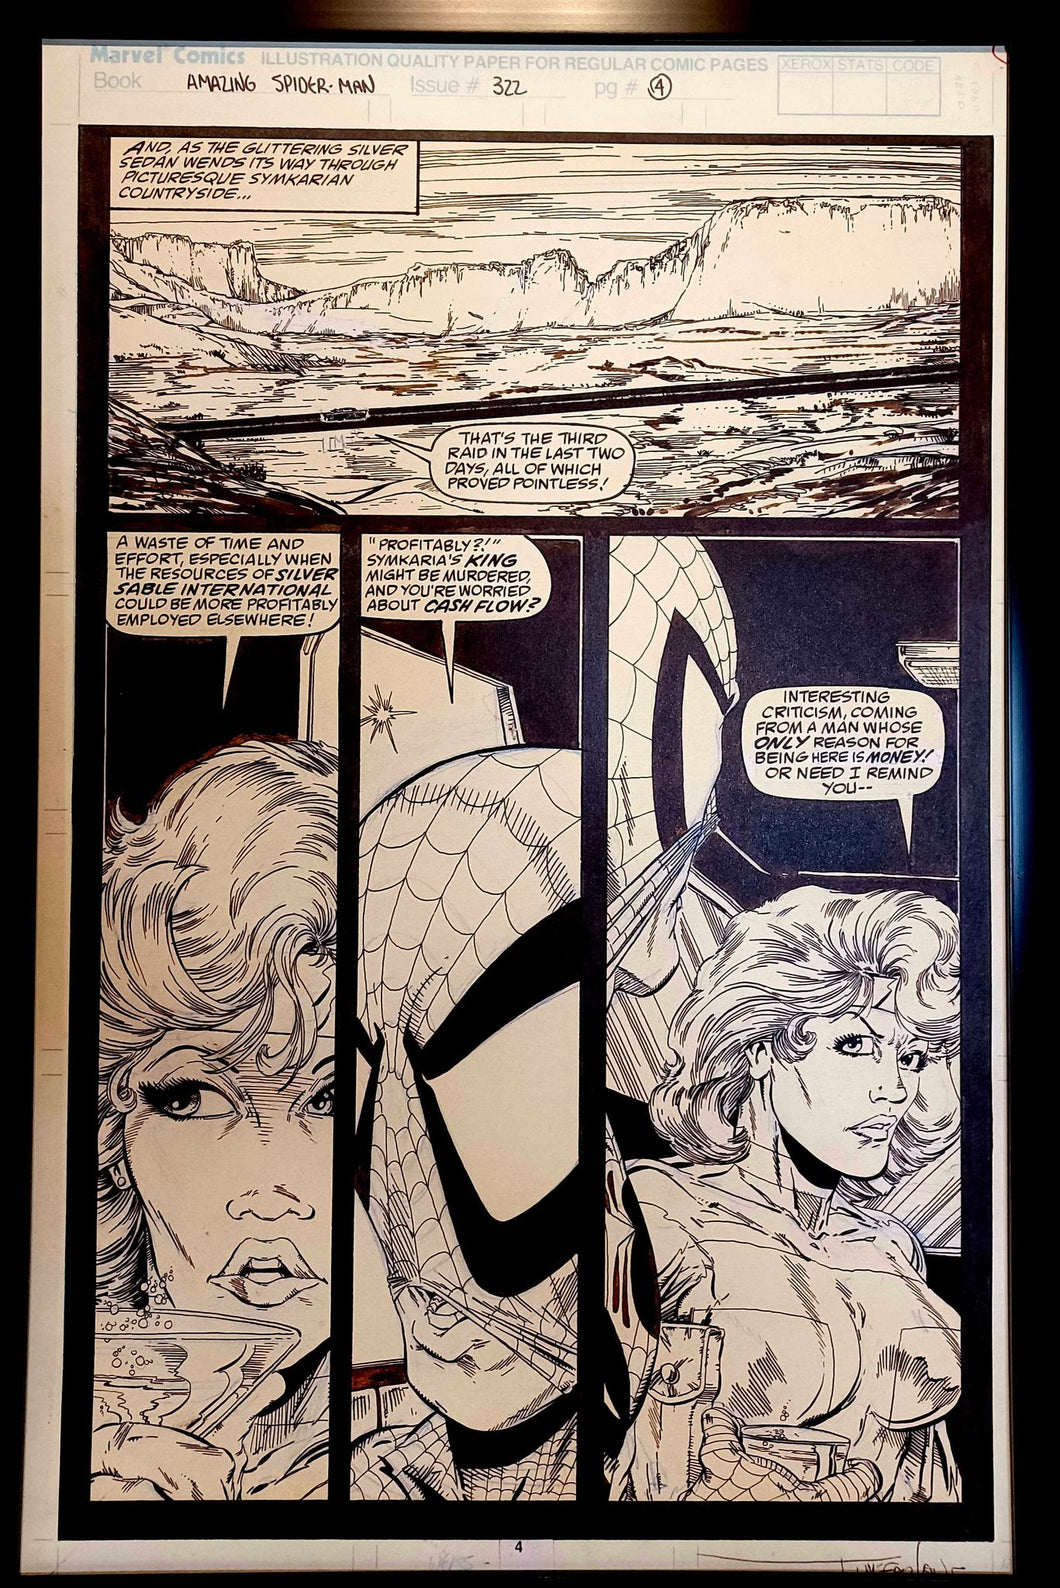 Amazing Spider-Man #322 pg. 4 by Todd McFarlane 11x17 FRAMED Original Art Print Comic Poster